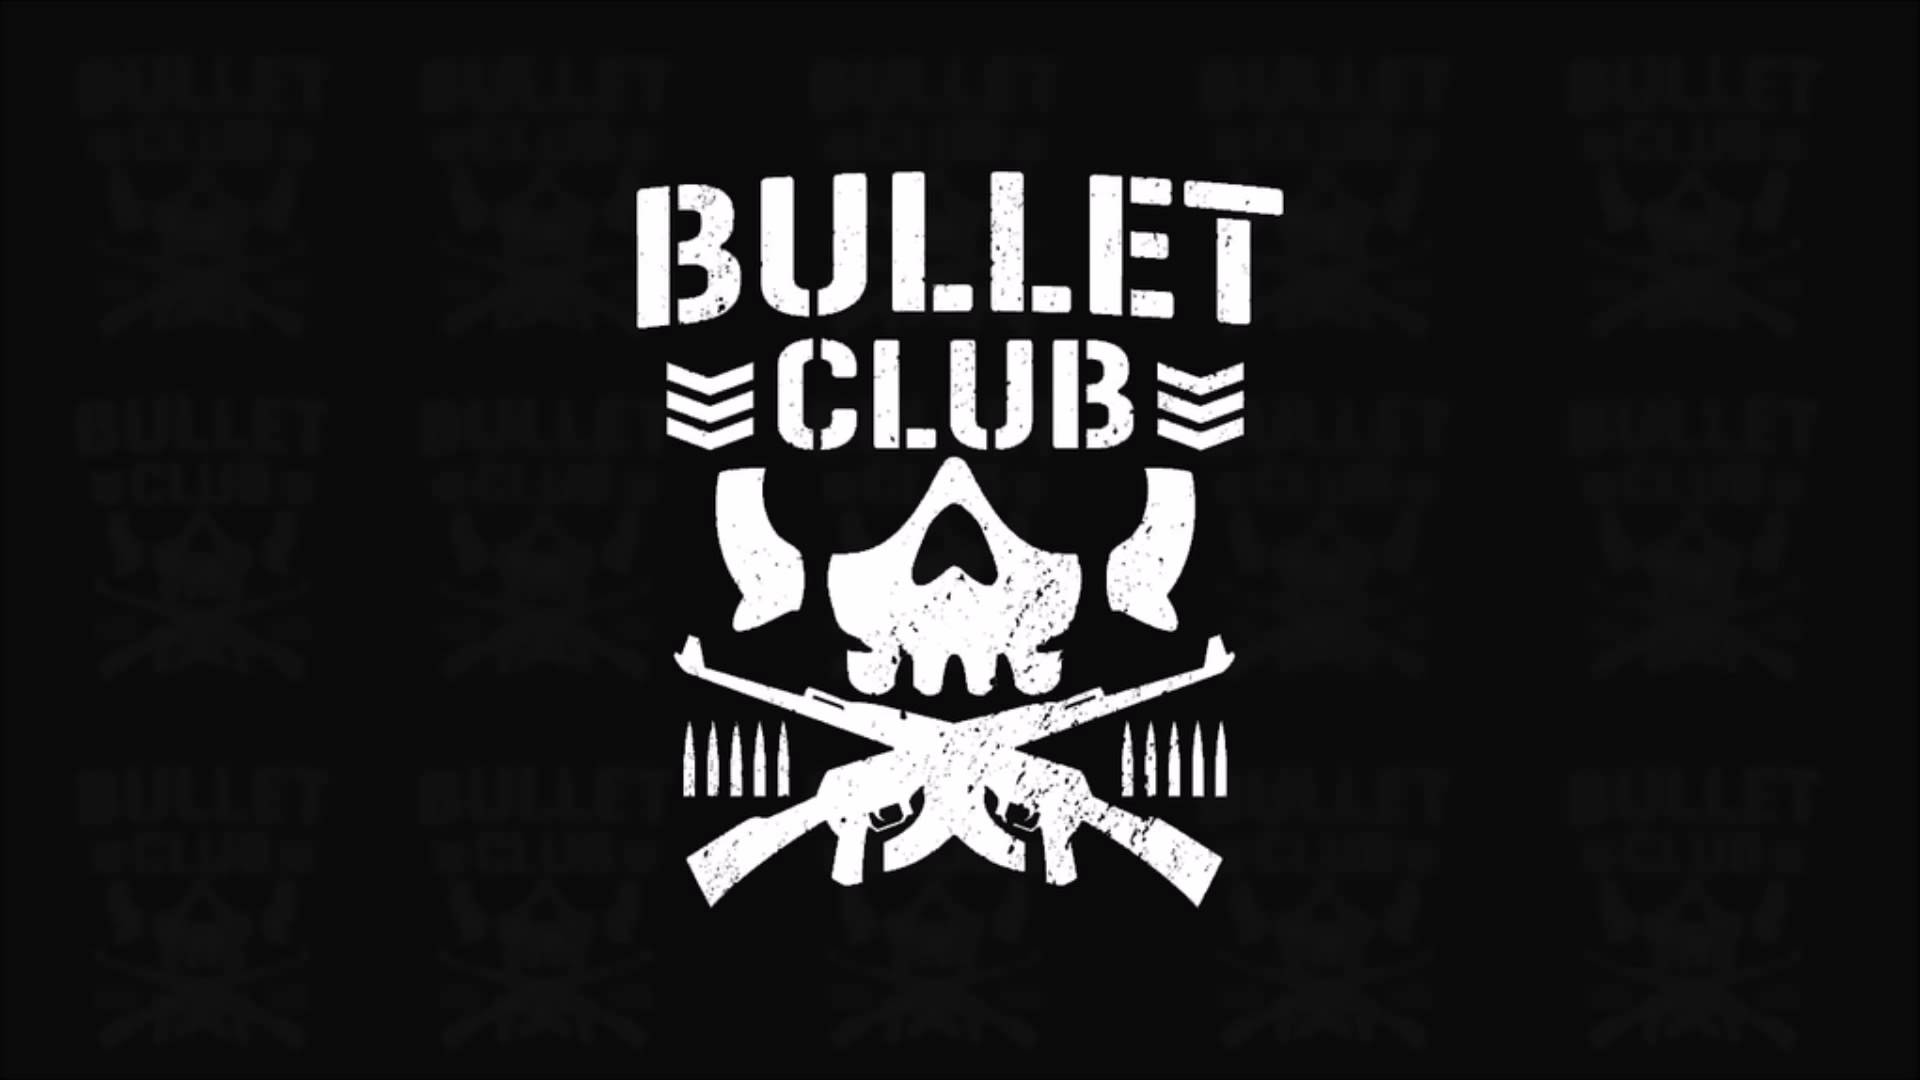 The Bullet Club Turns on AJ Styles